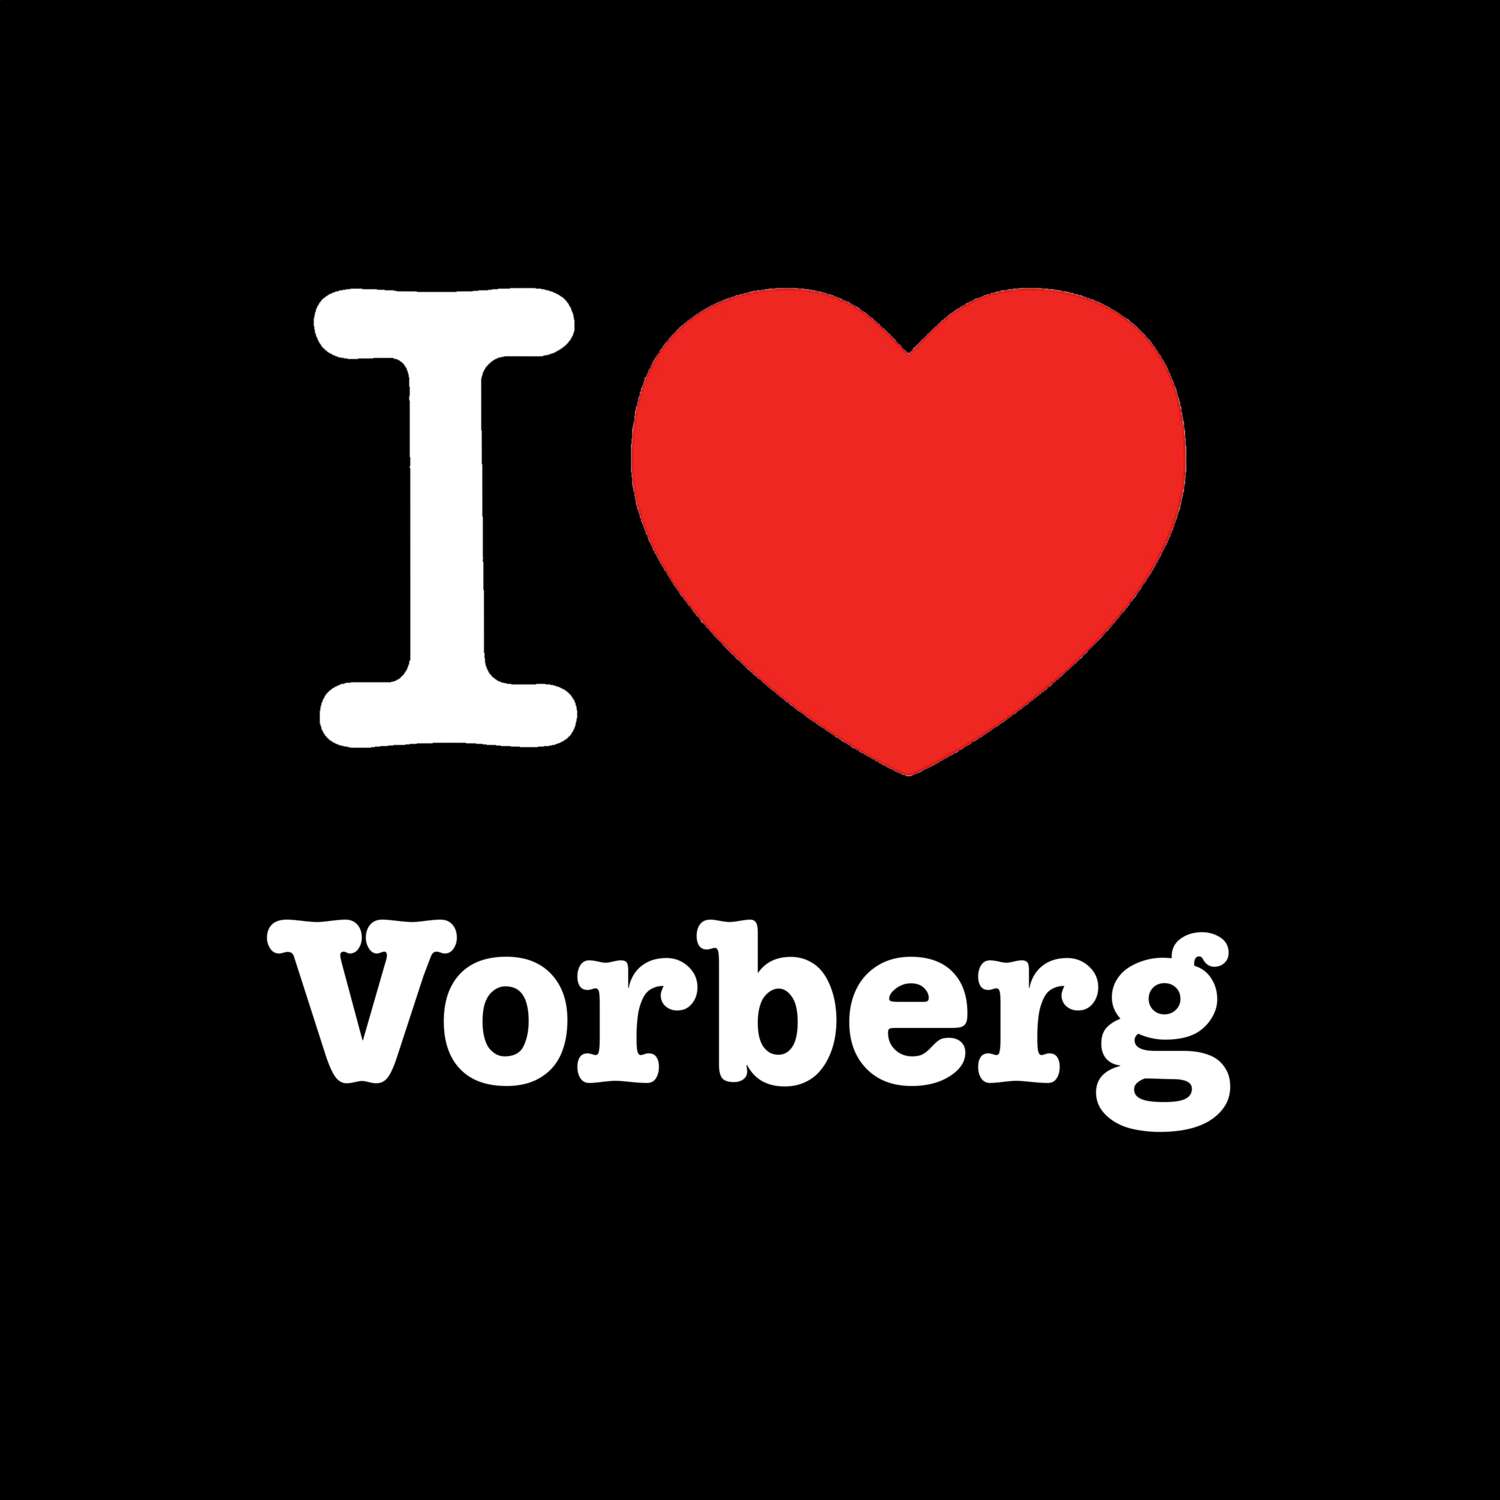 Vorberg T-Shirt »I love«